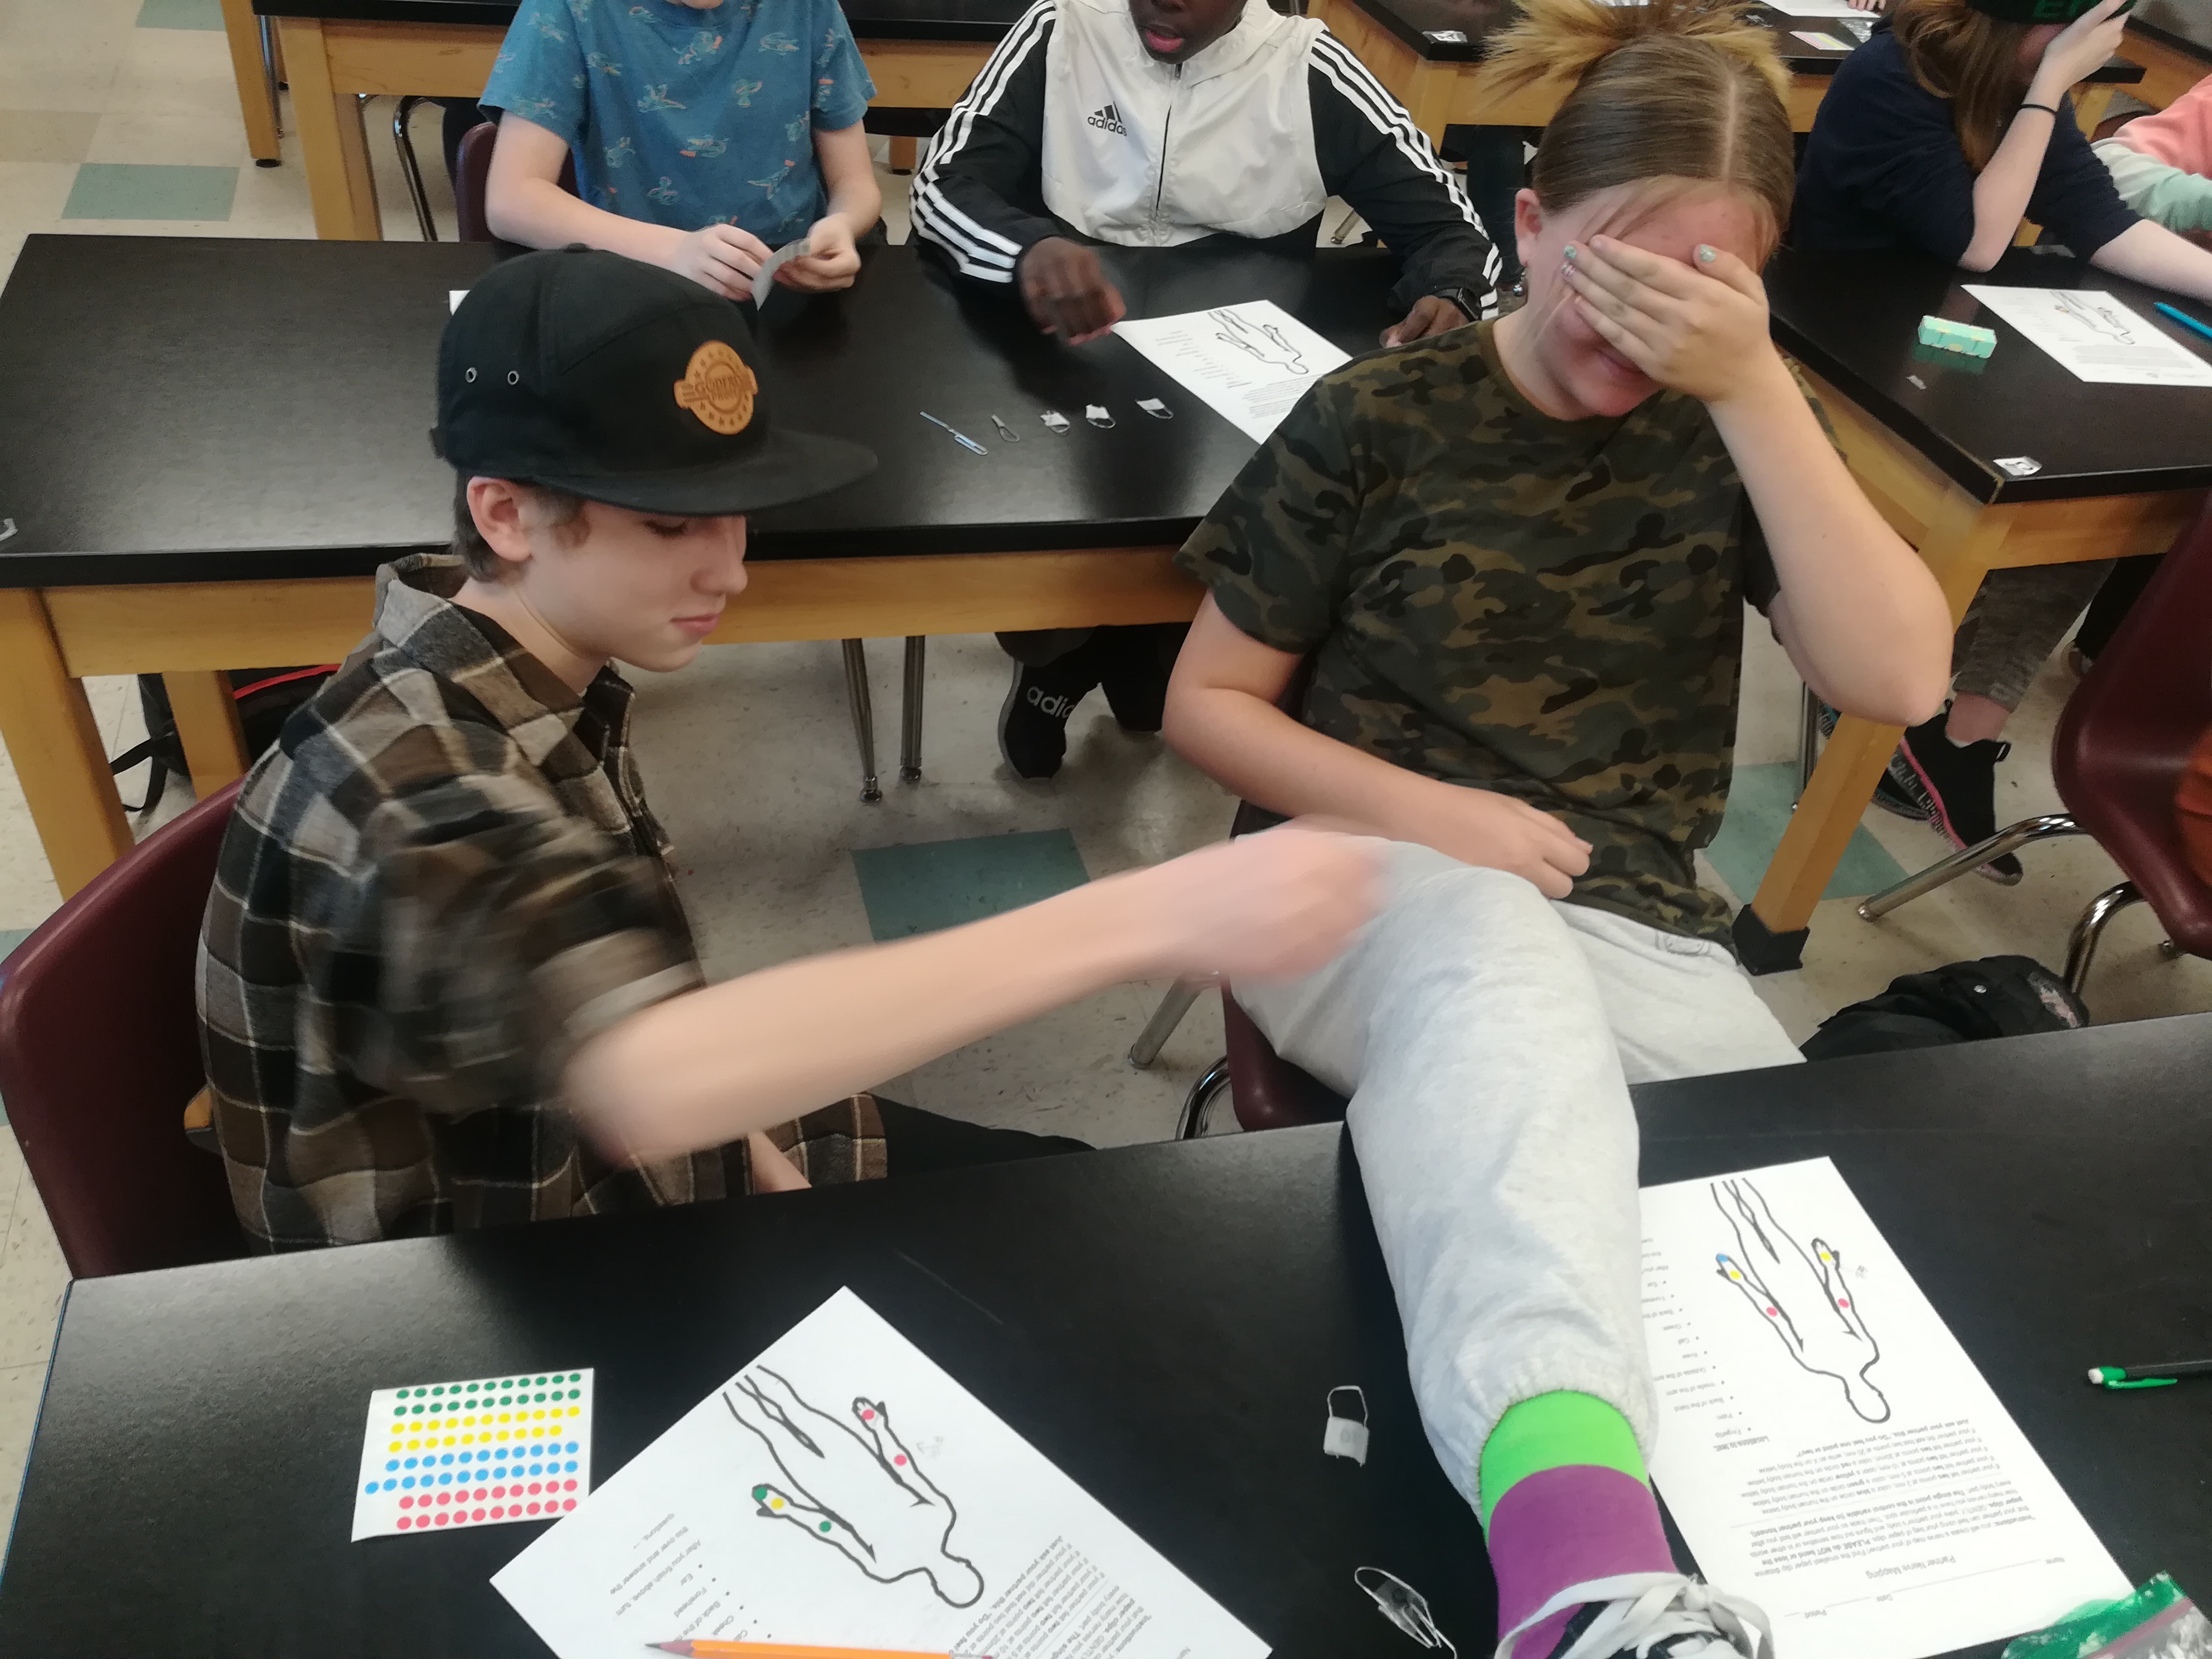 Students testing nerve receptors